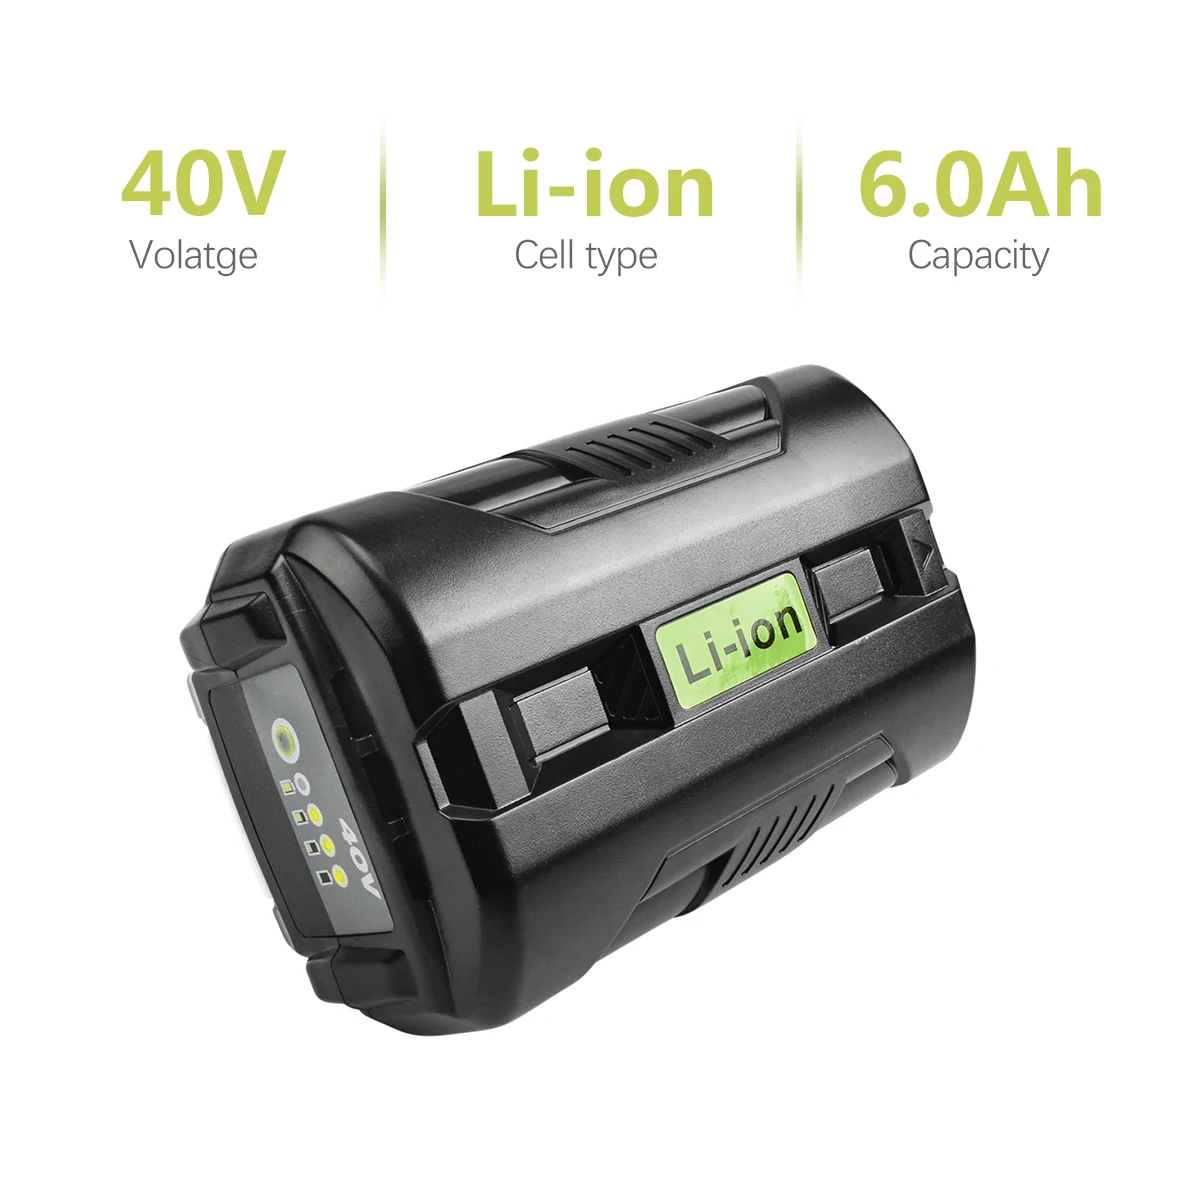 Ryobi 40V lithium Battery Replacement 6000mAh